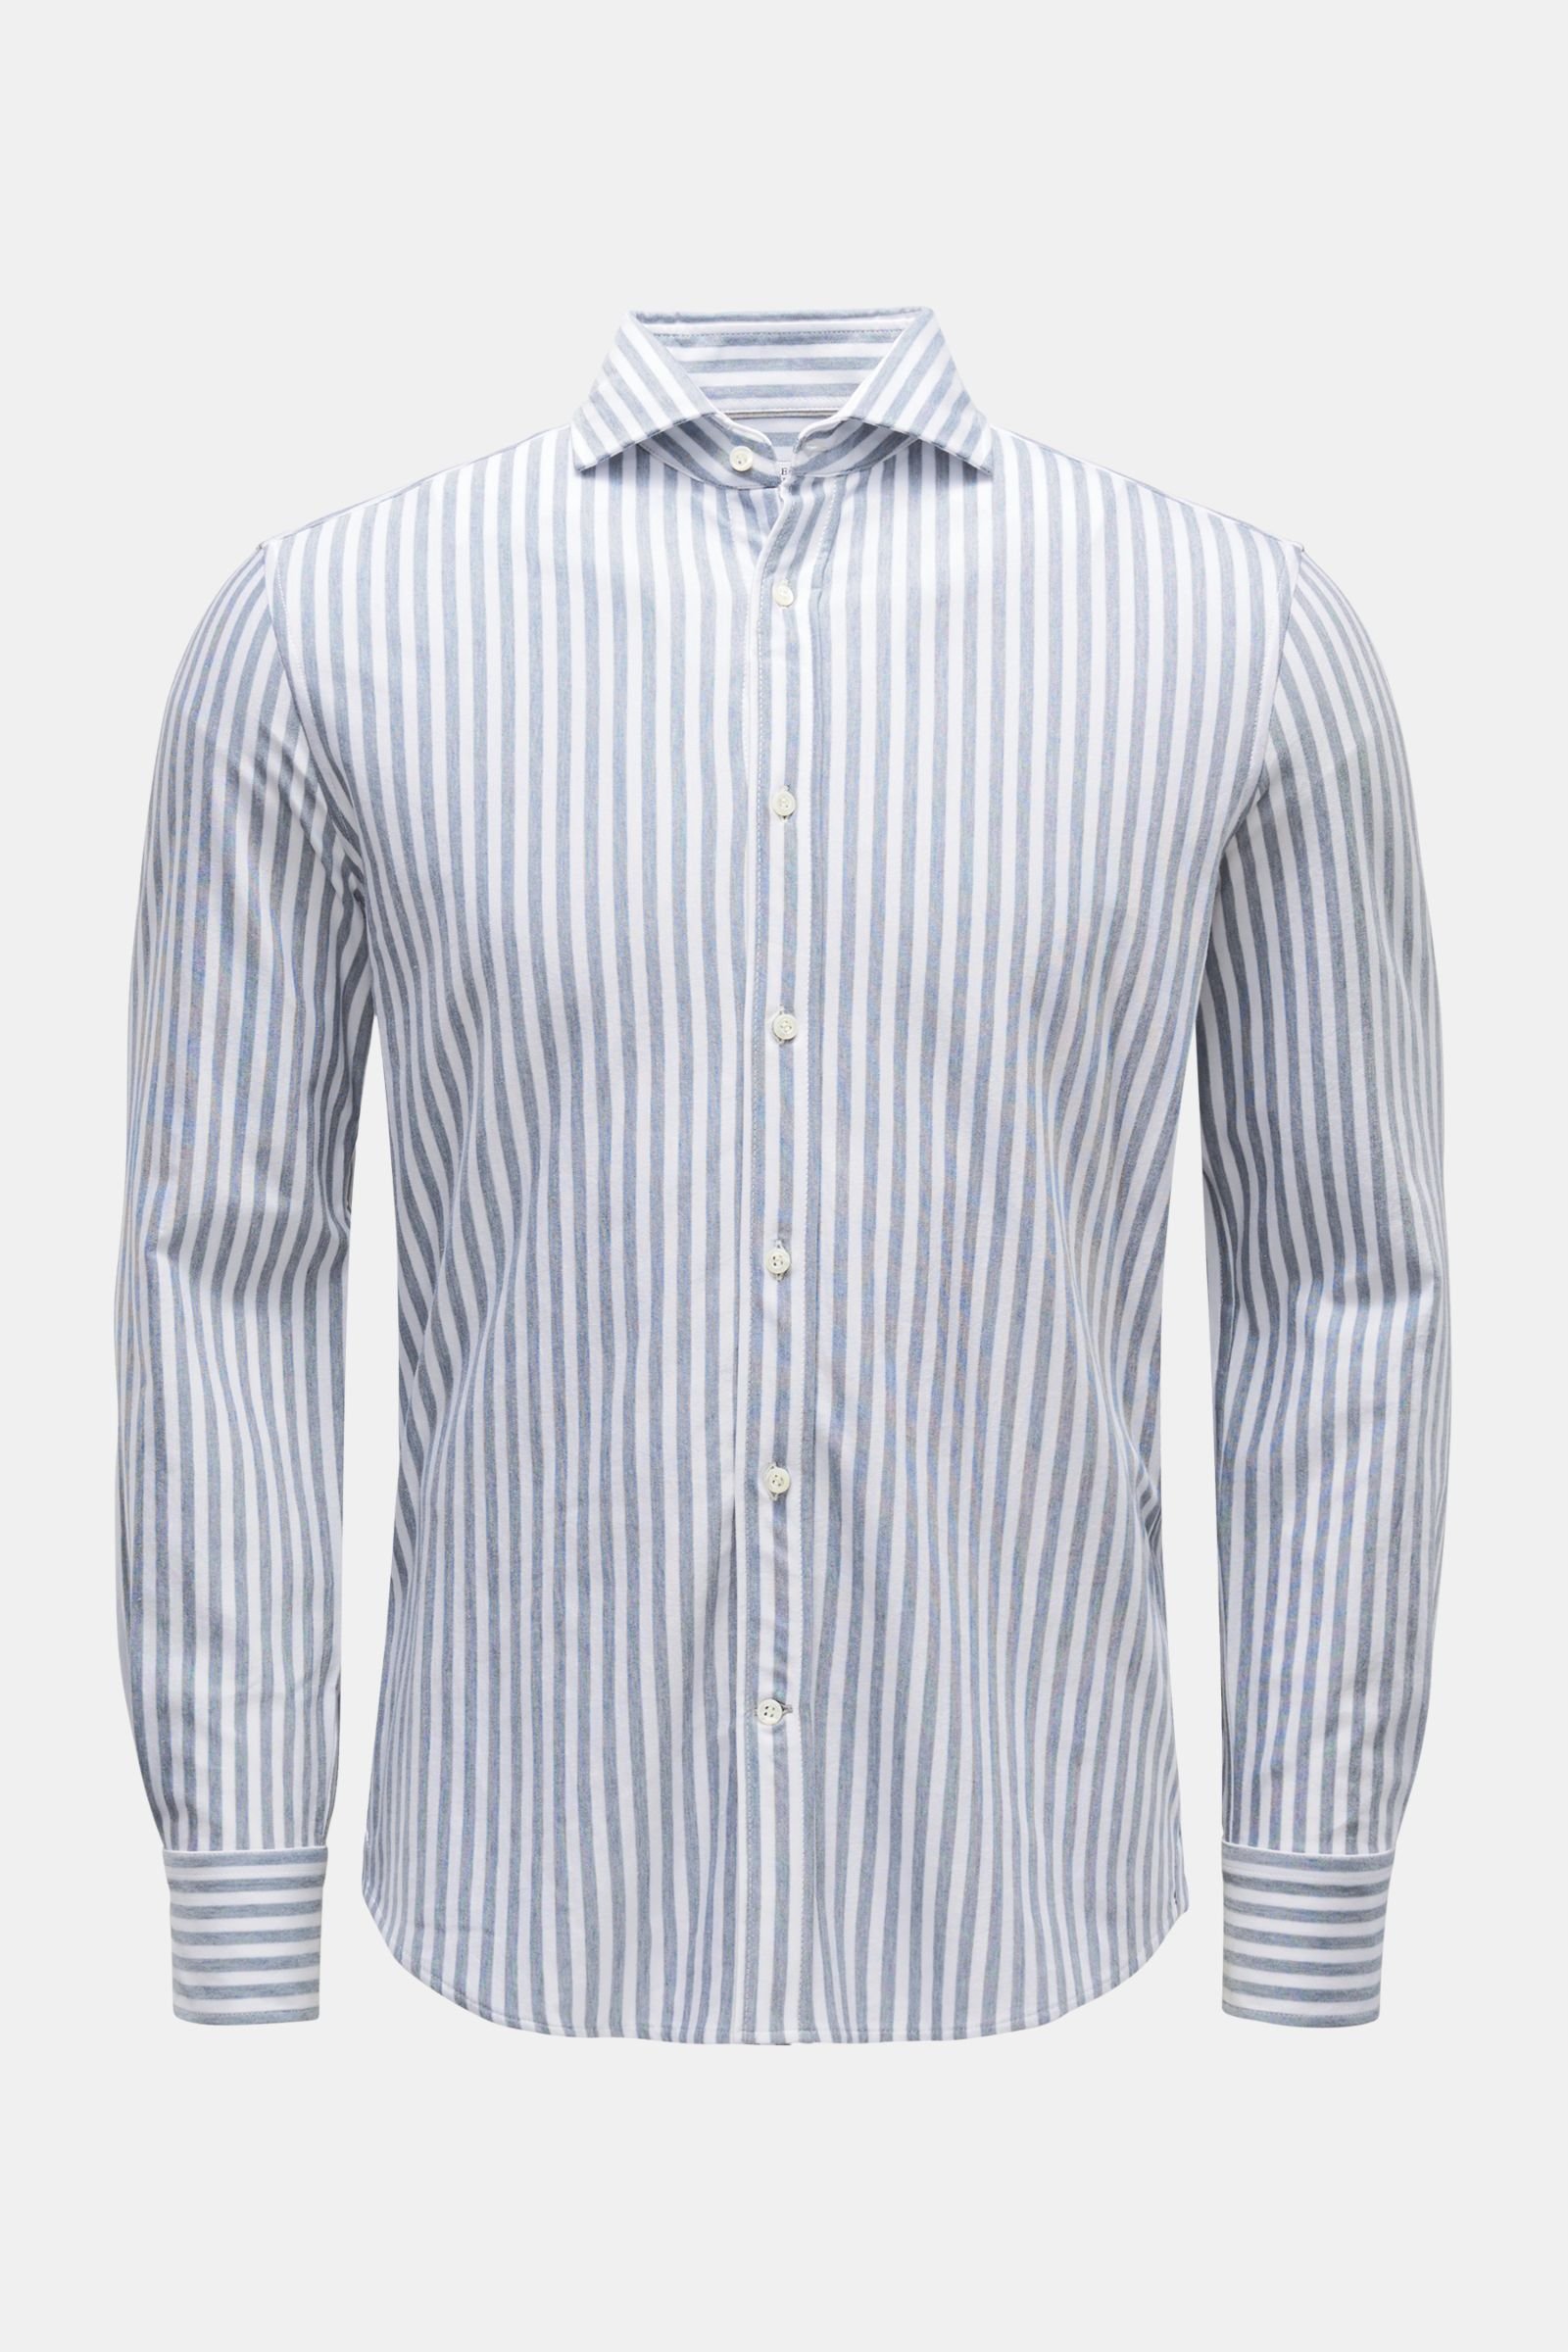 Jersey shirt shark collar grey-blue/white striped